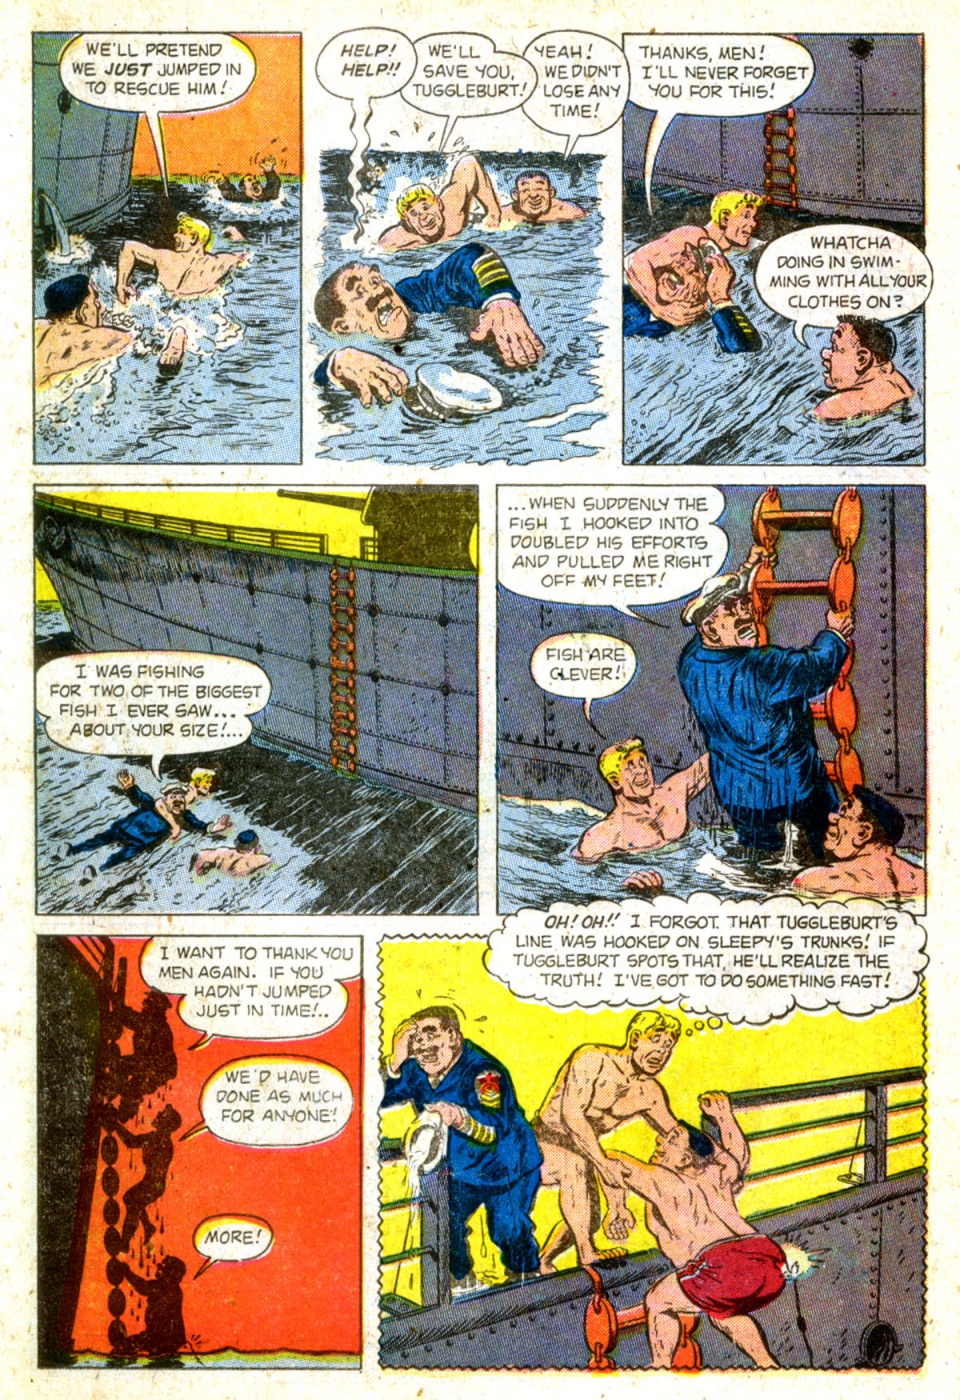 Anchors the Salt Water Daffy - Comics (b) (24)